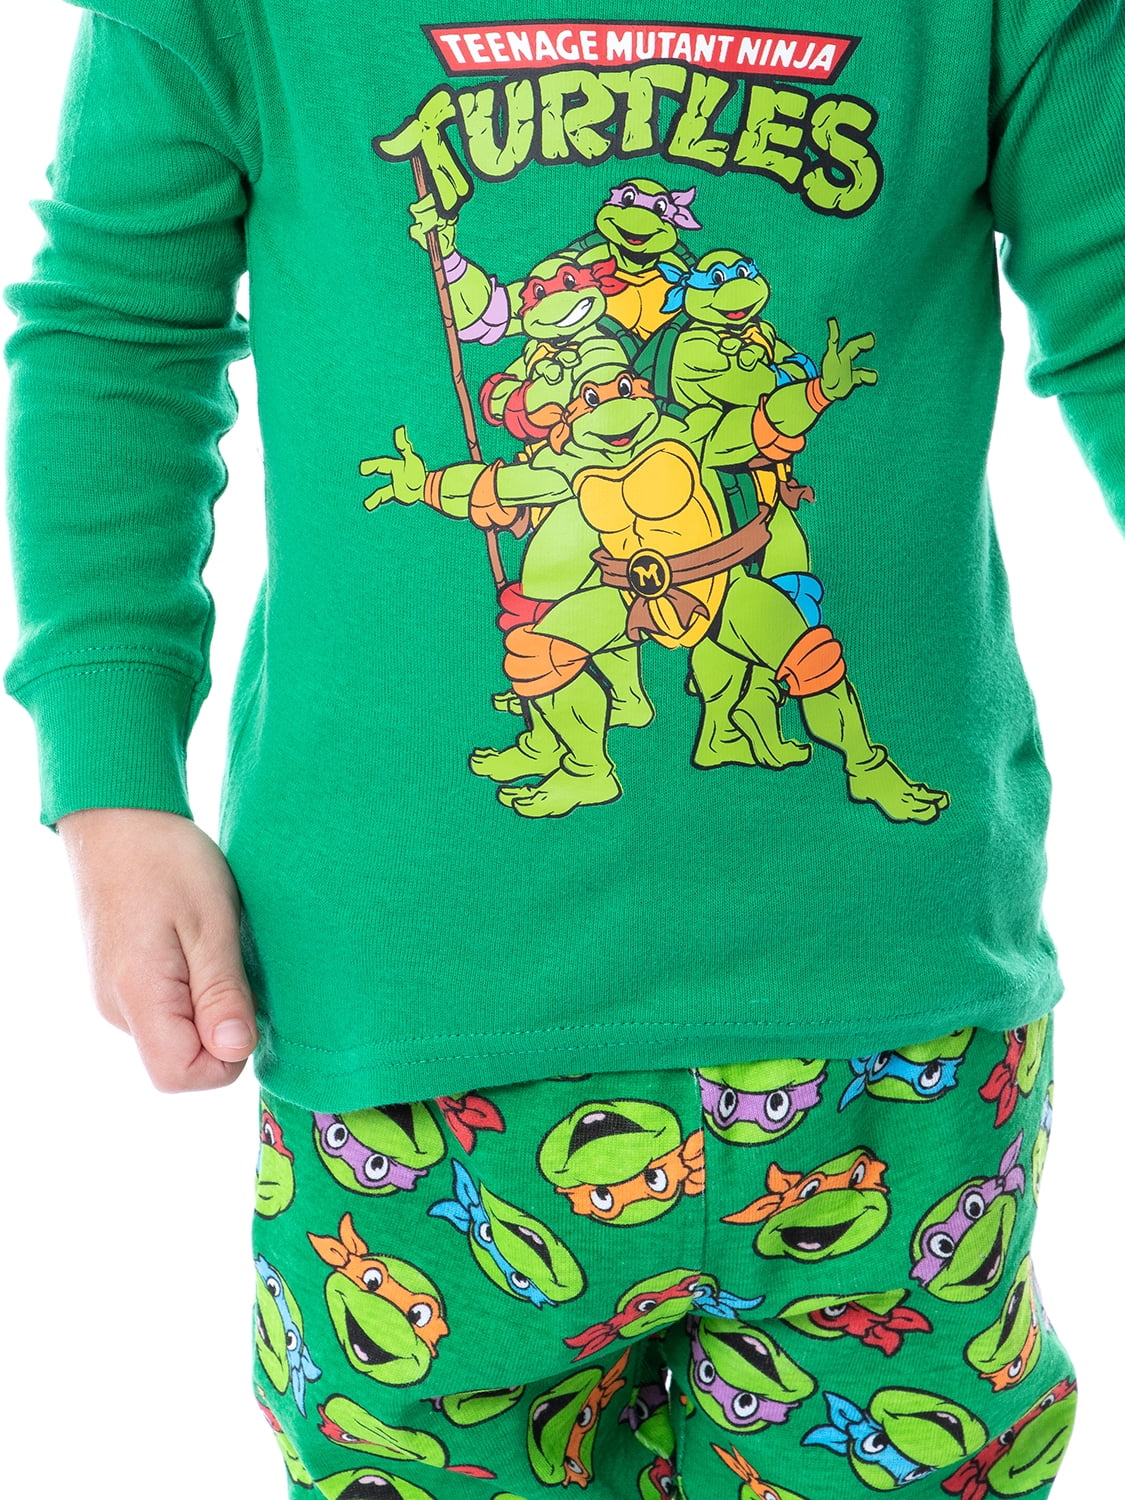 Nickelodeon Toddler Boys' Teenage Mutant Ninja Turtles Jogger Pajama Set (4T)  